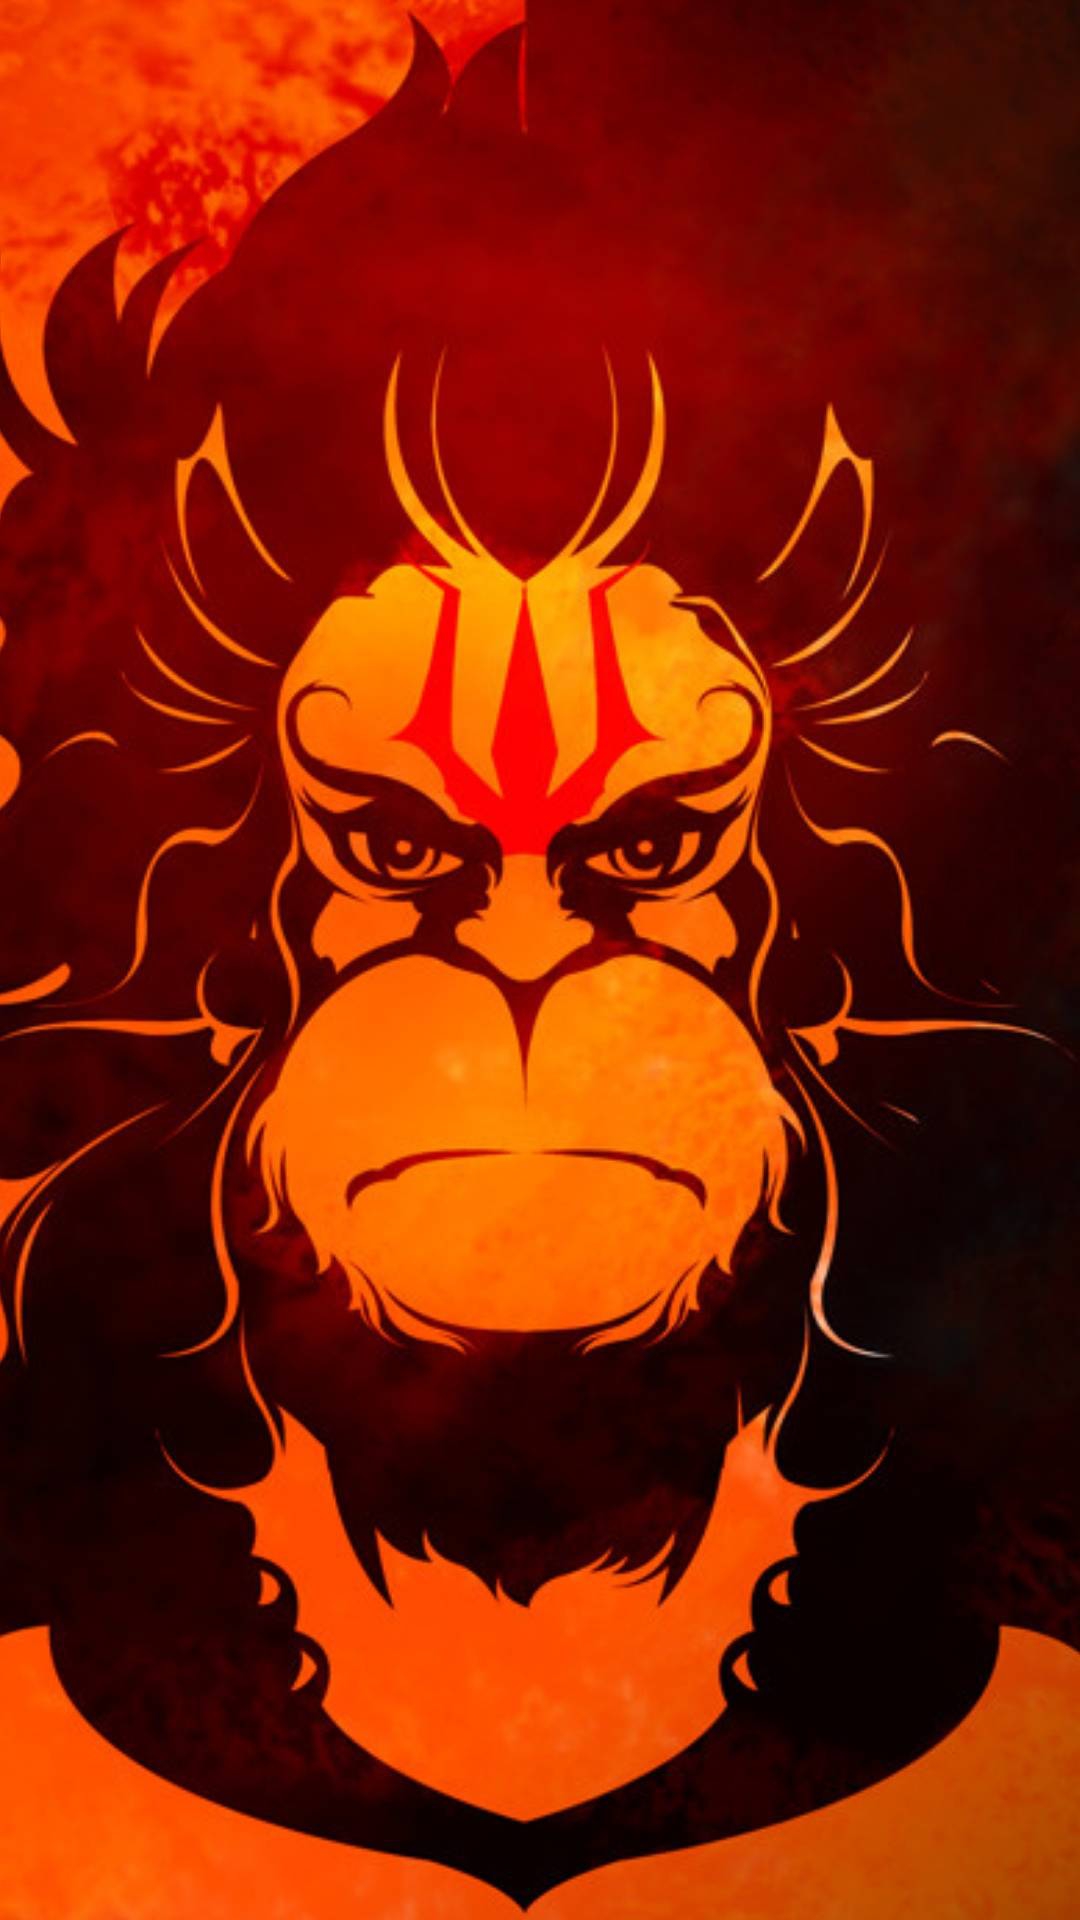 Lord Hanuman iPhone Wallpaper